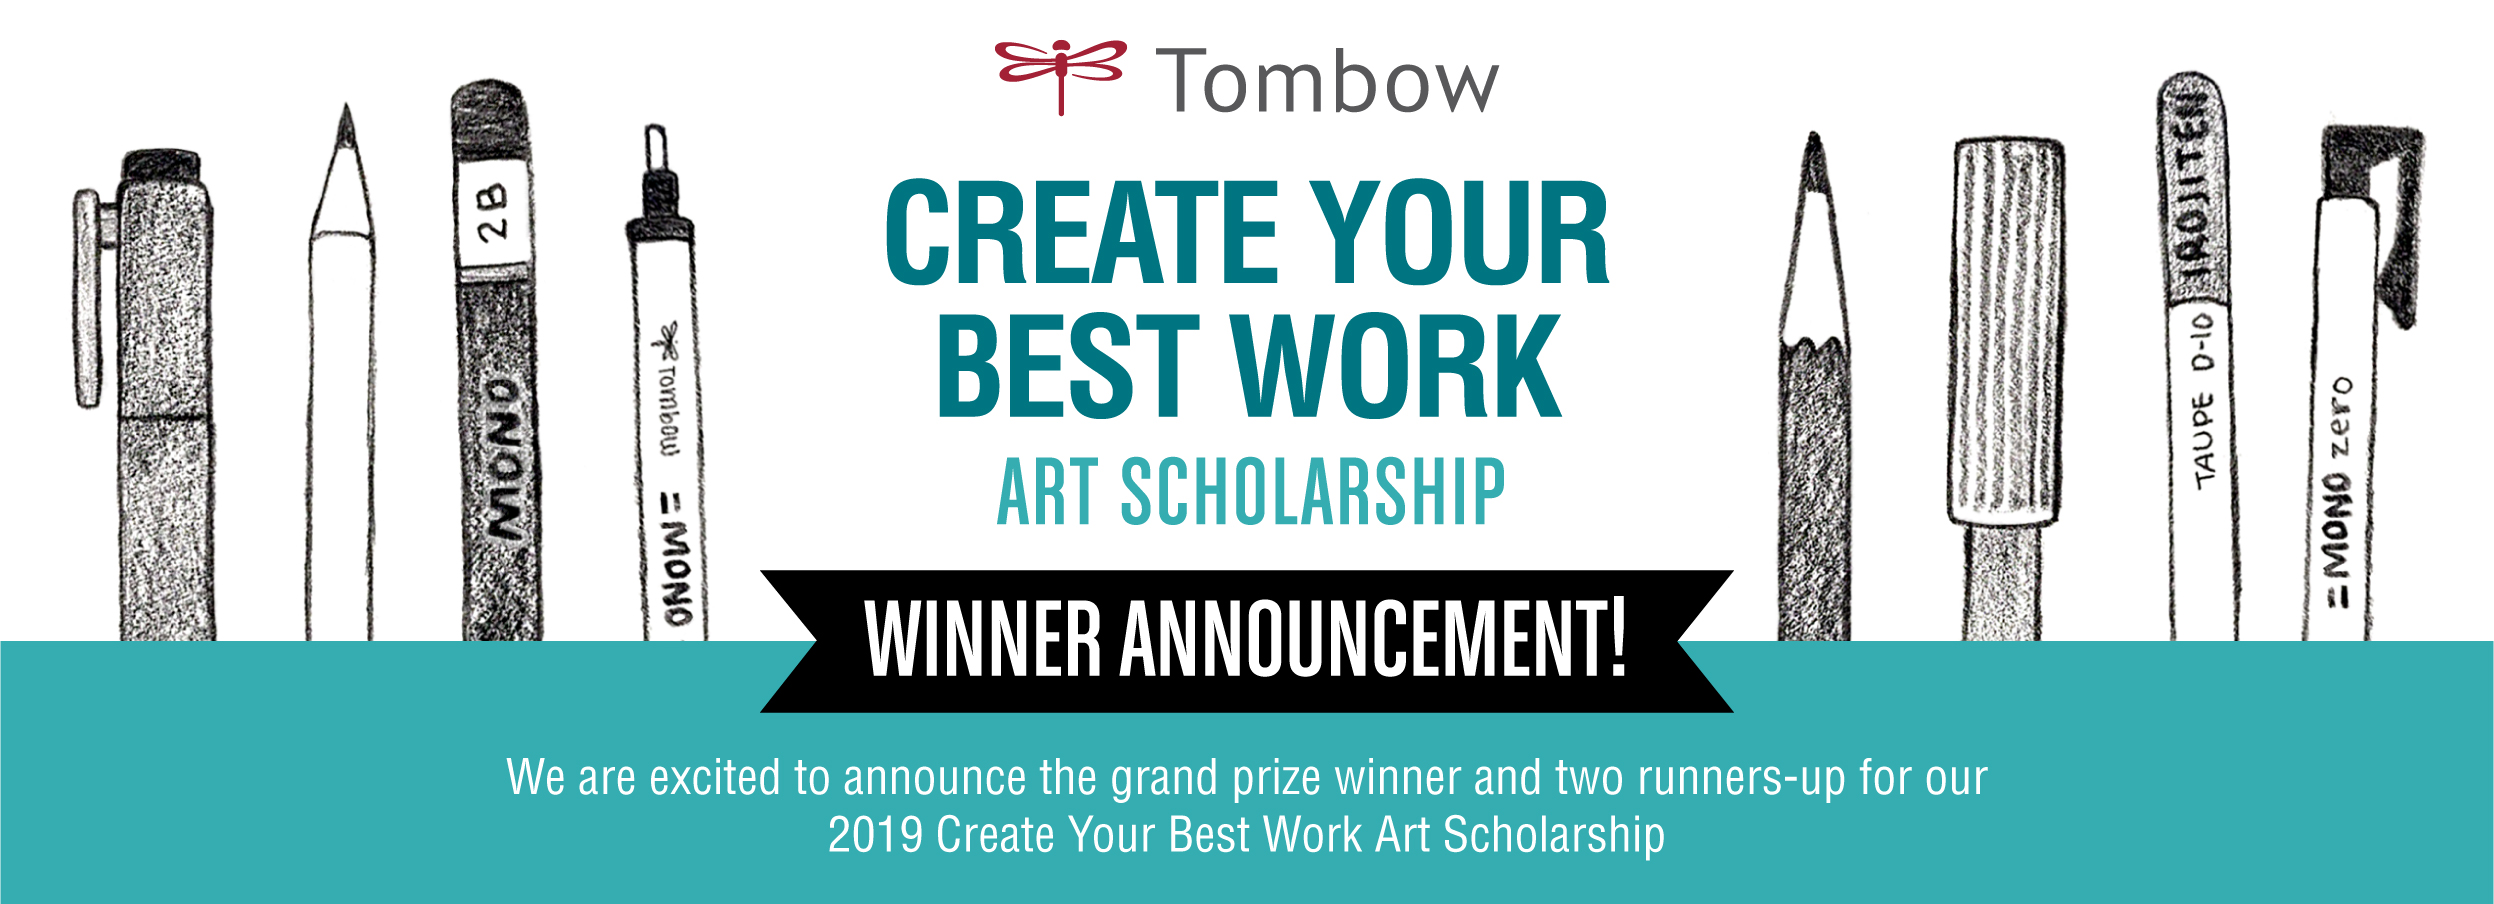 Tombow's Create Your Best Work Art Scholarship Winners